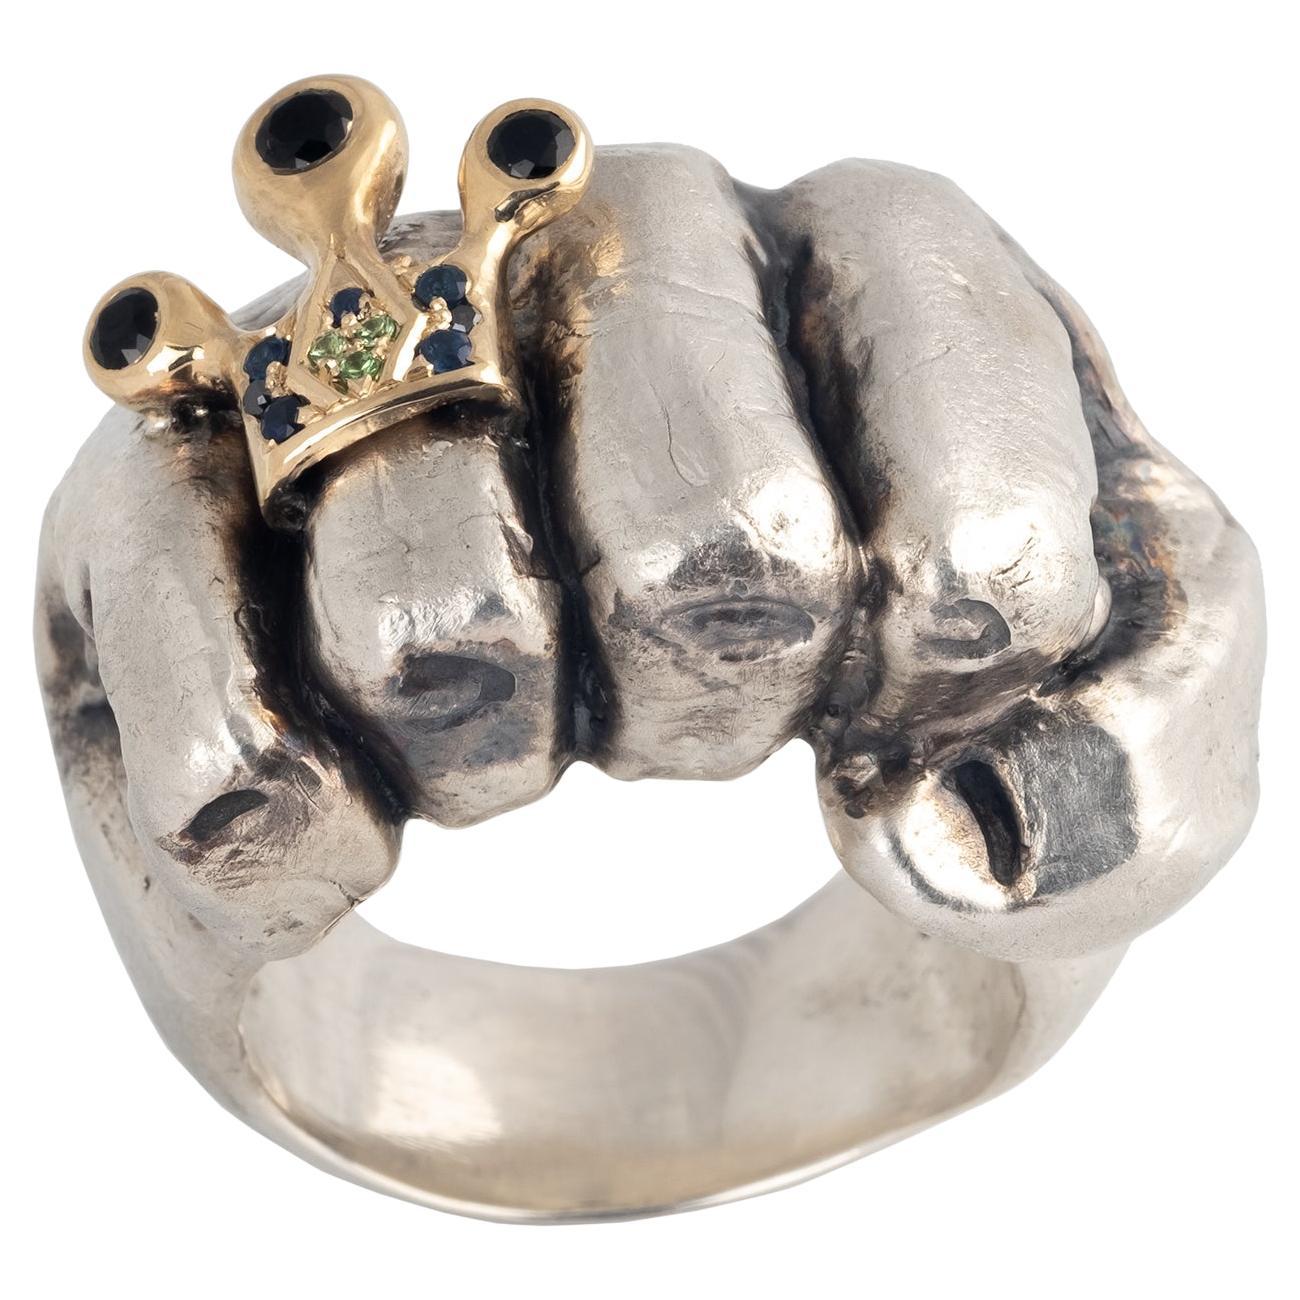 TGDJ 10 Karat White Gold Engagement Ring for Men - Paved Ring with 0.55 Ct  Dazzling 250 Round Diamonds - High Polish Gleaming Finish Fashion Jewelry  (4)|Amazon.com